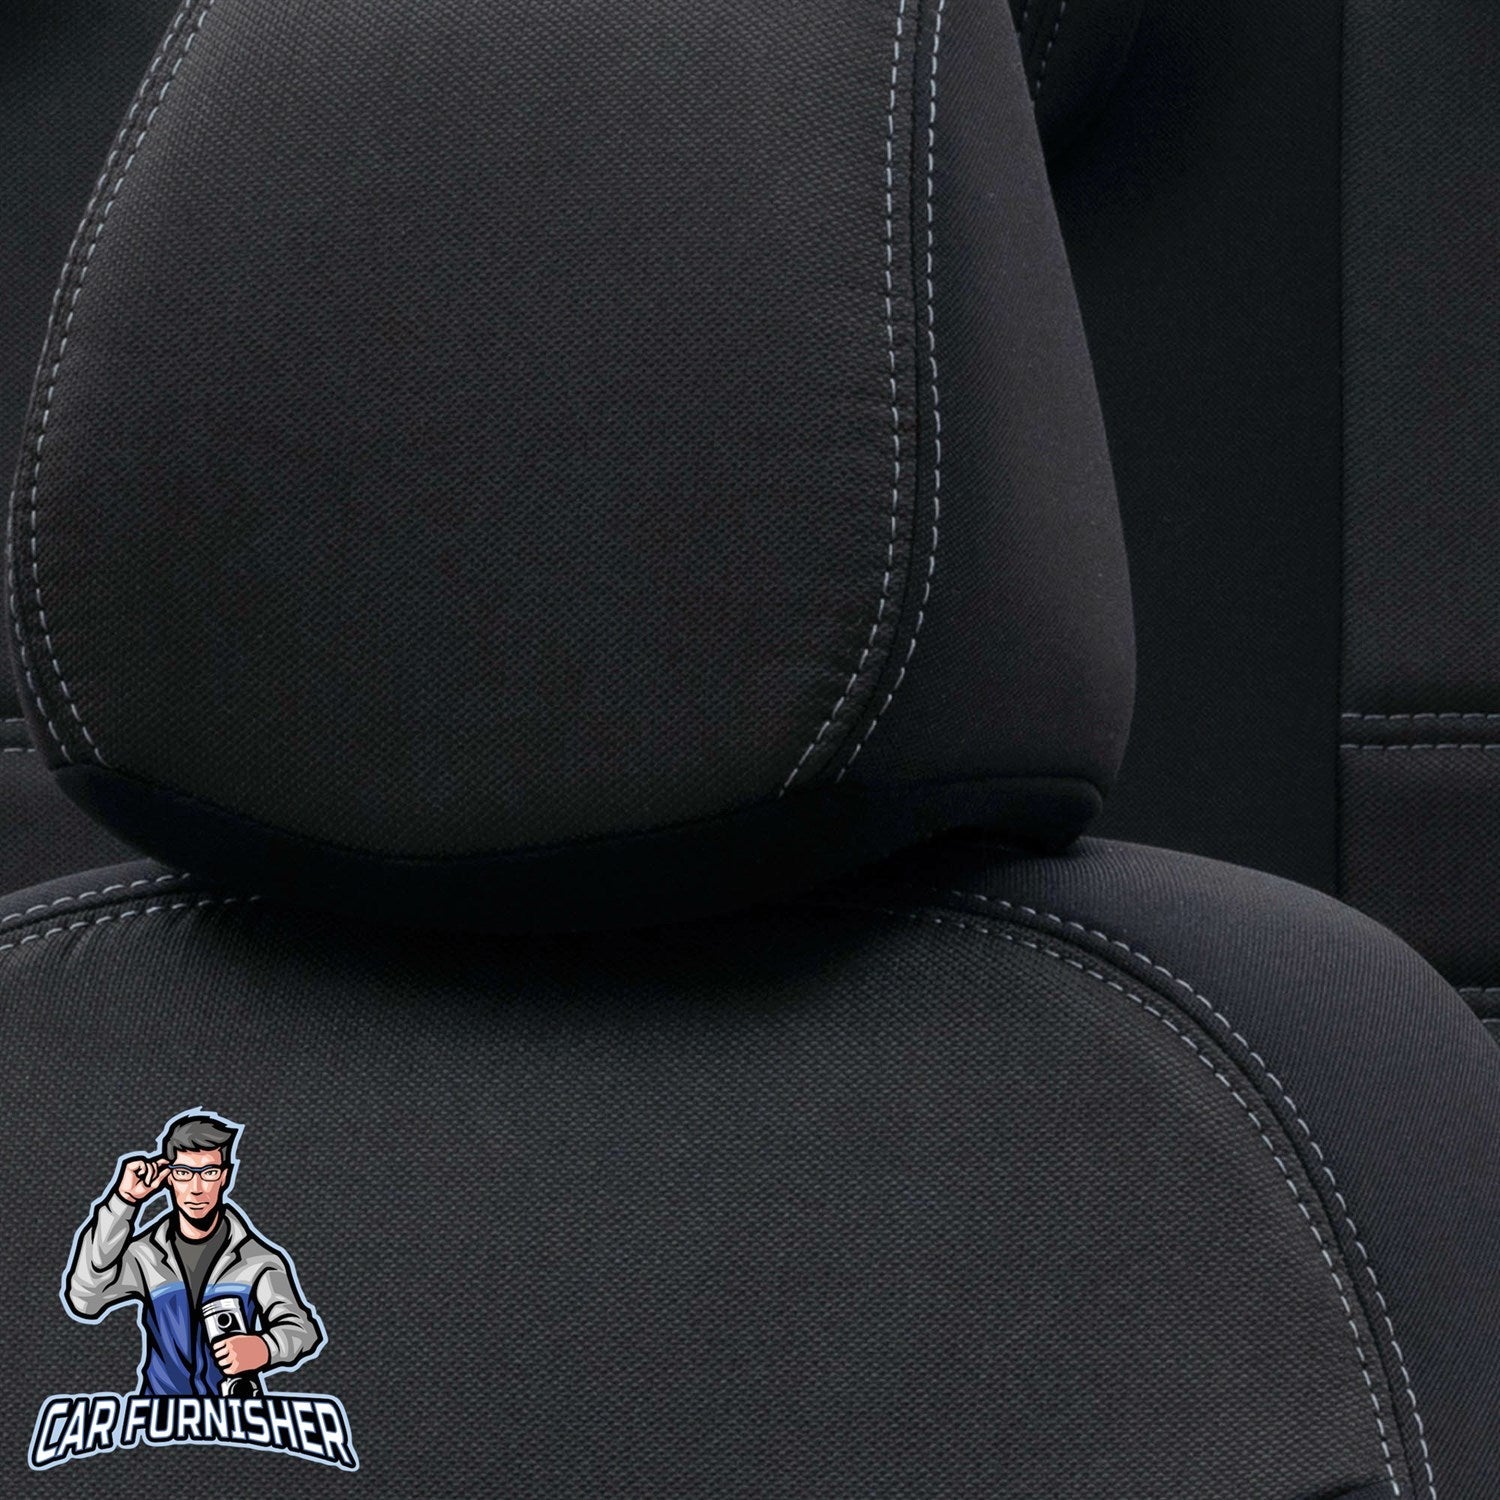 Toyota Yaris Seat Cover Original Jacquard Design Black Jacquard Fabric